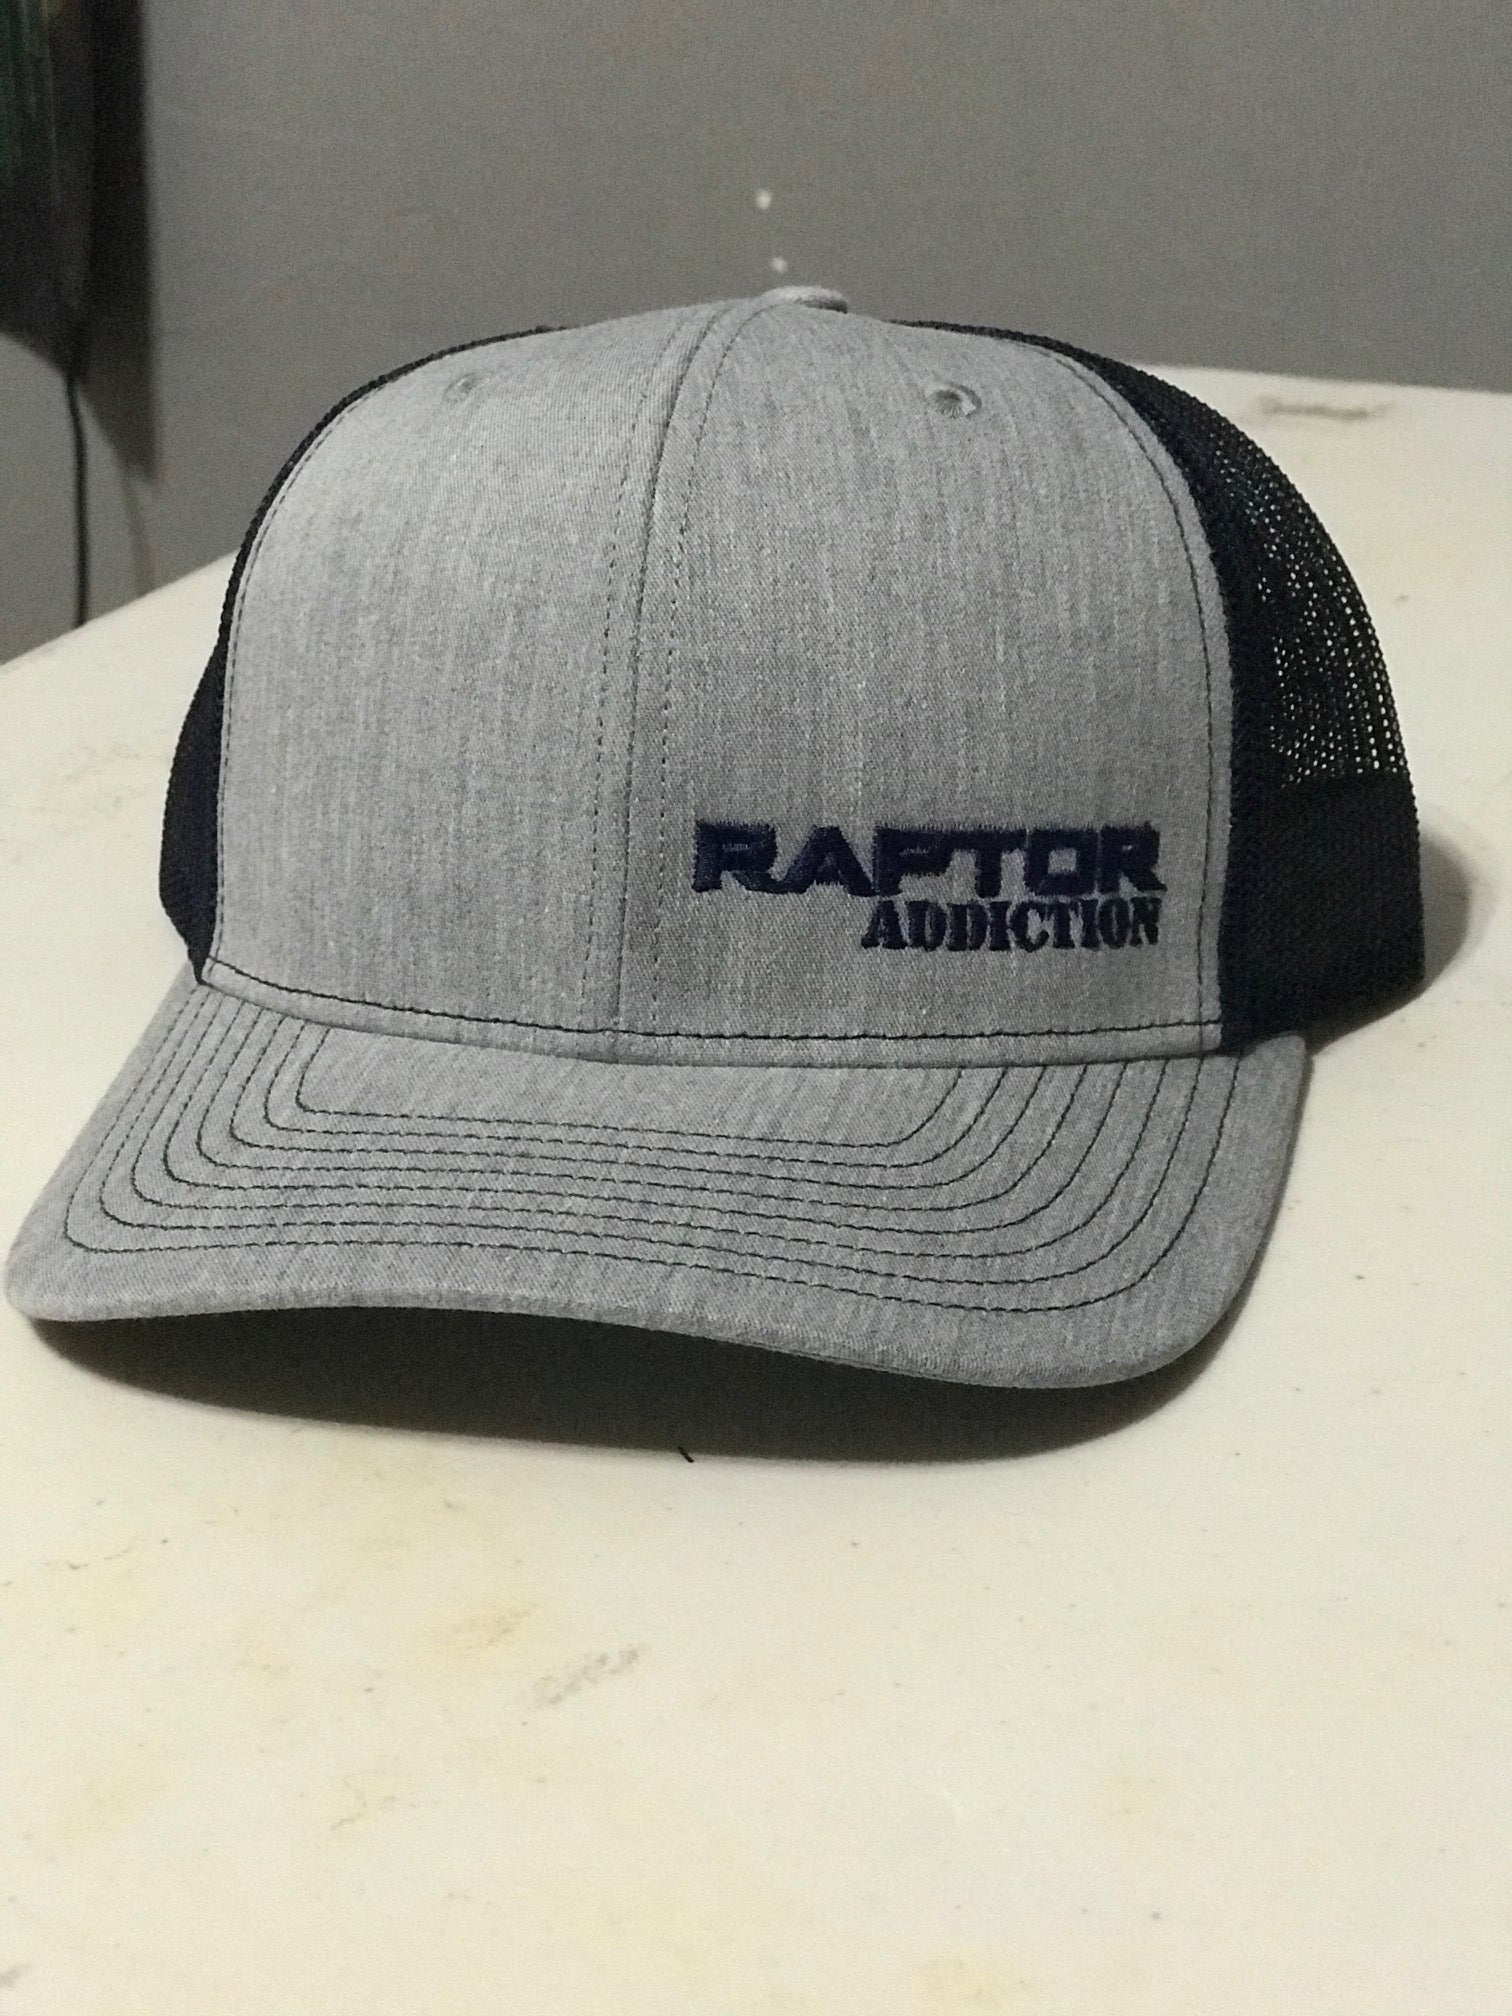 Raptor Addiction Trucker Hat Black with Grey